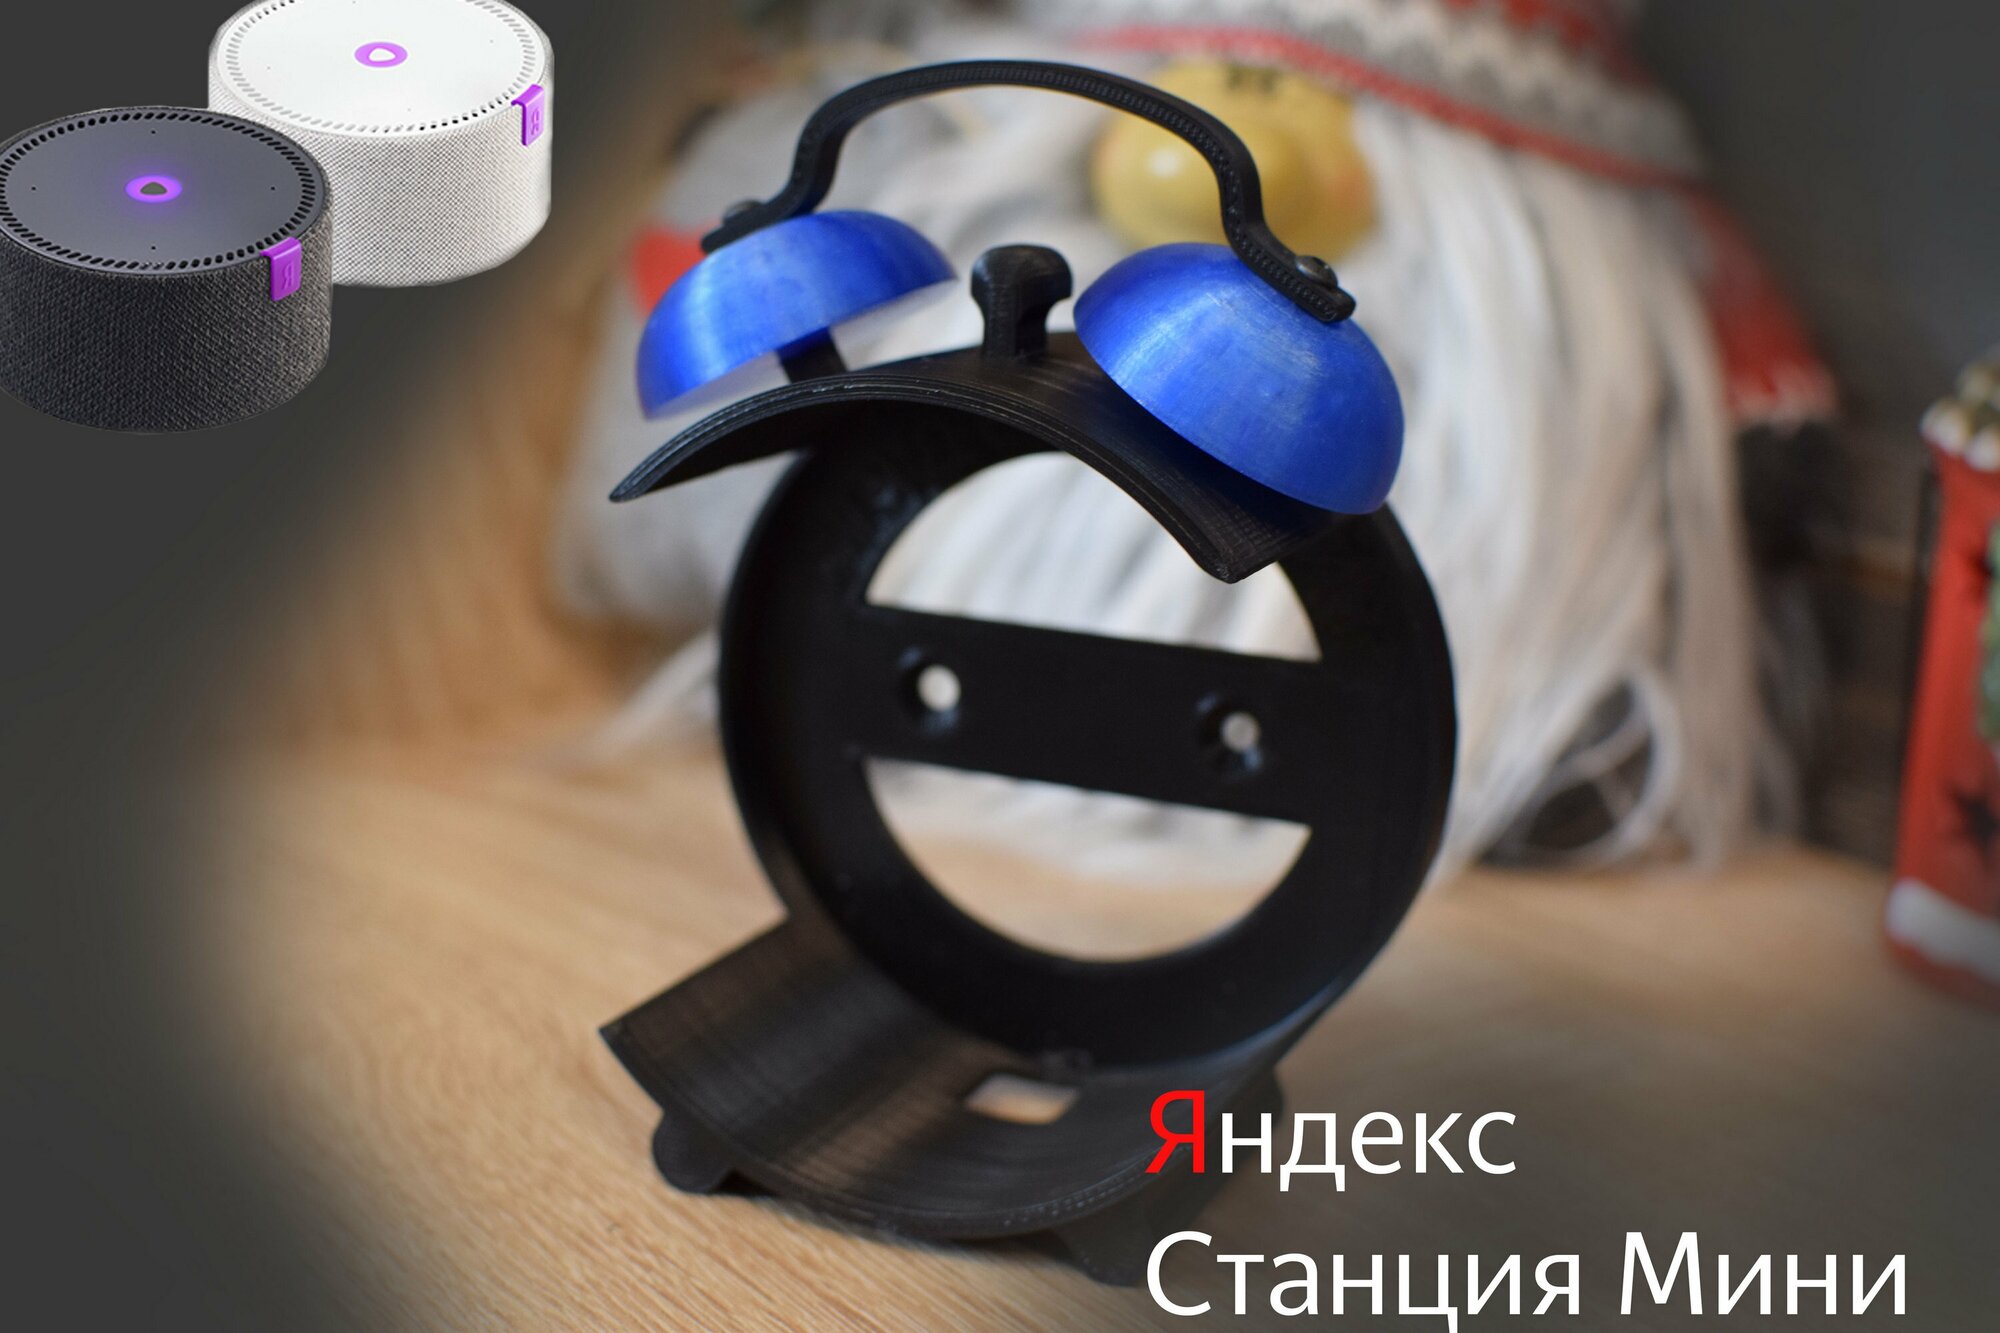 Подставка для Яндекс Cтанции Мини старая версия (черная с синим)